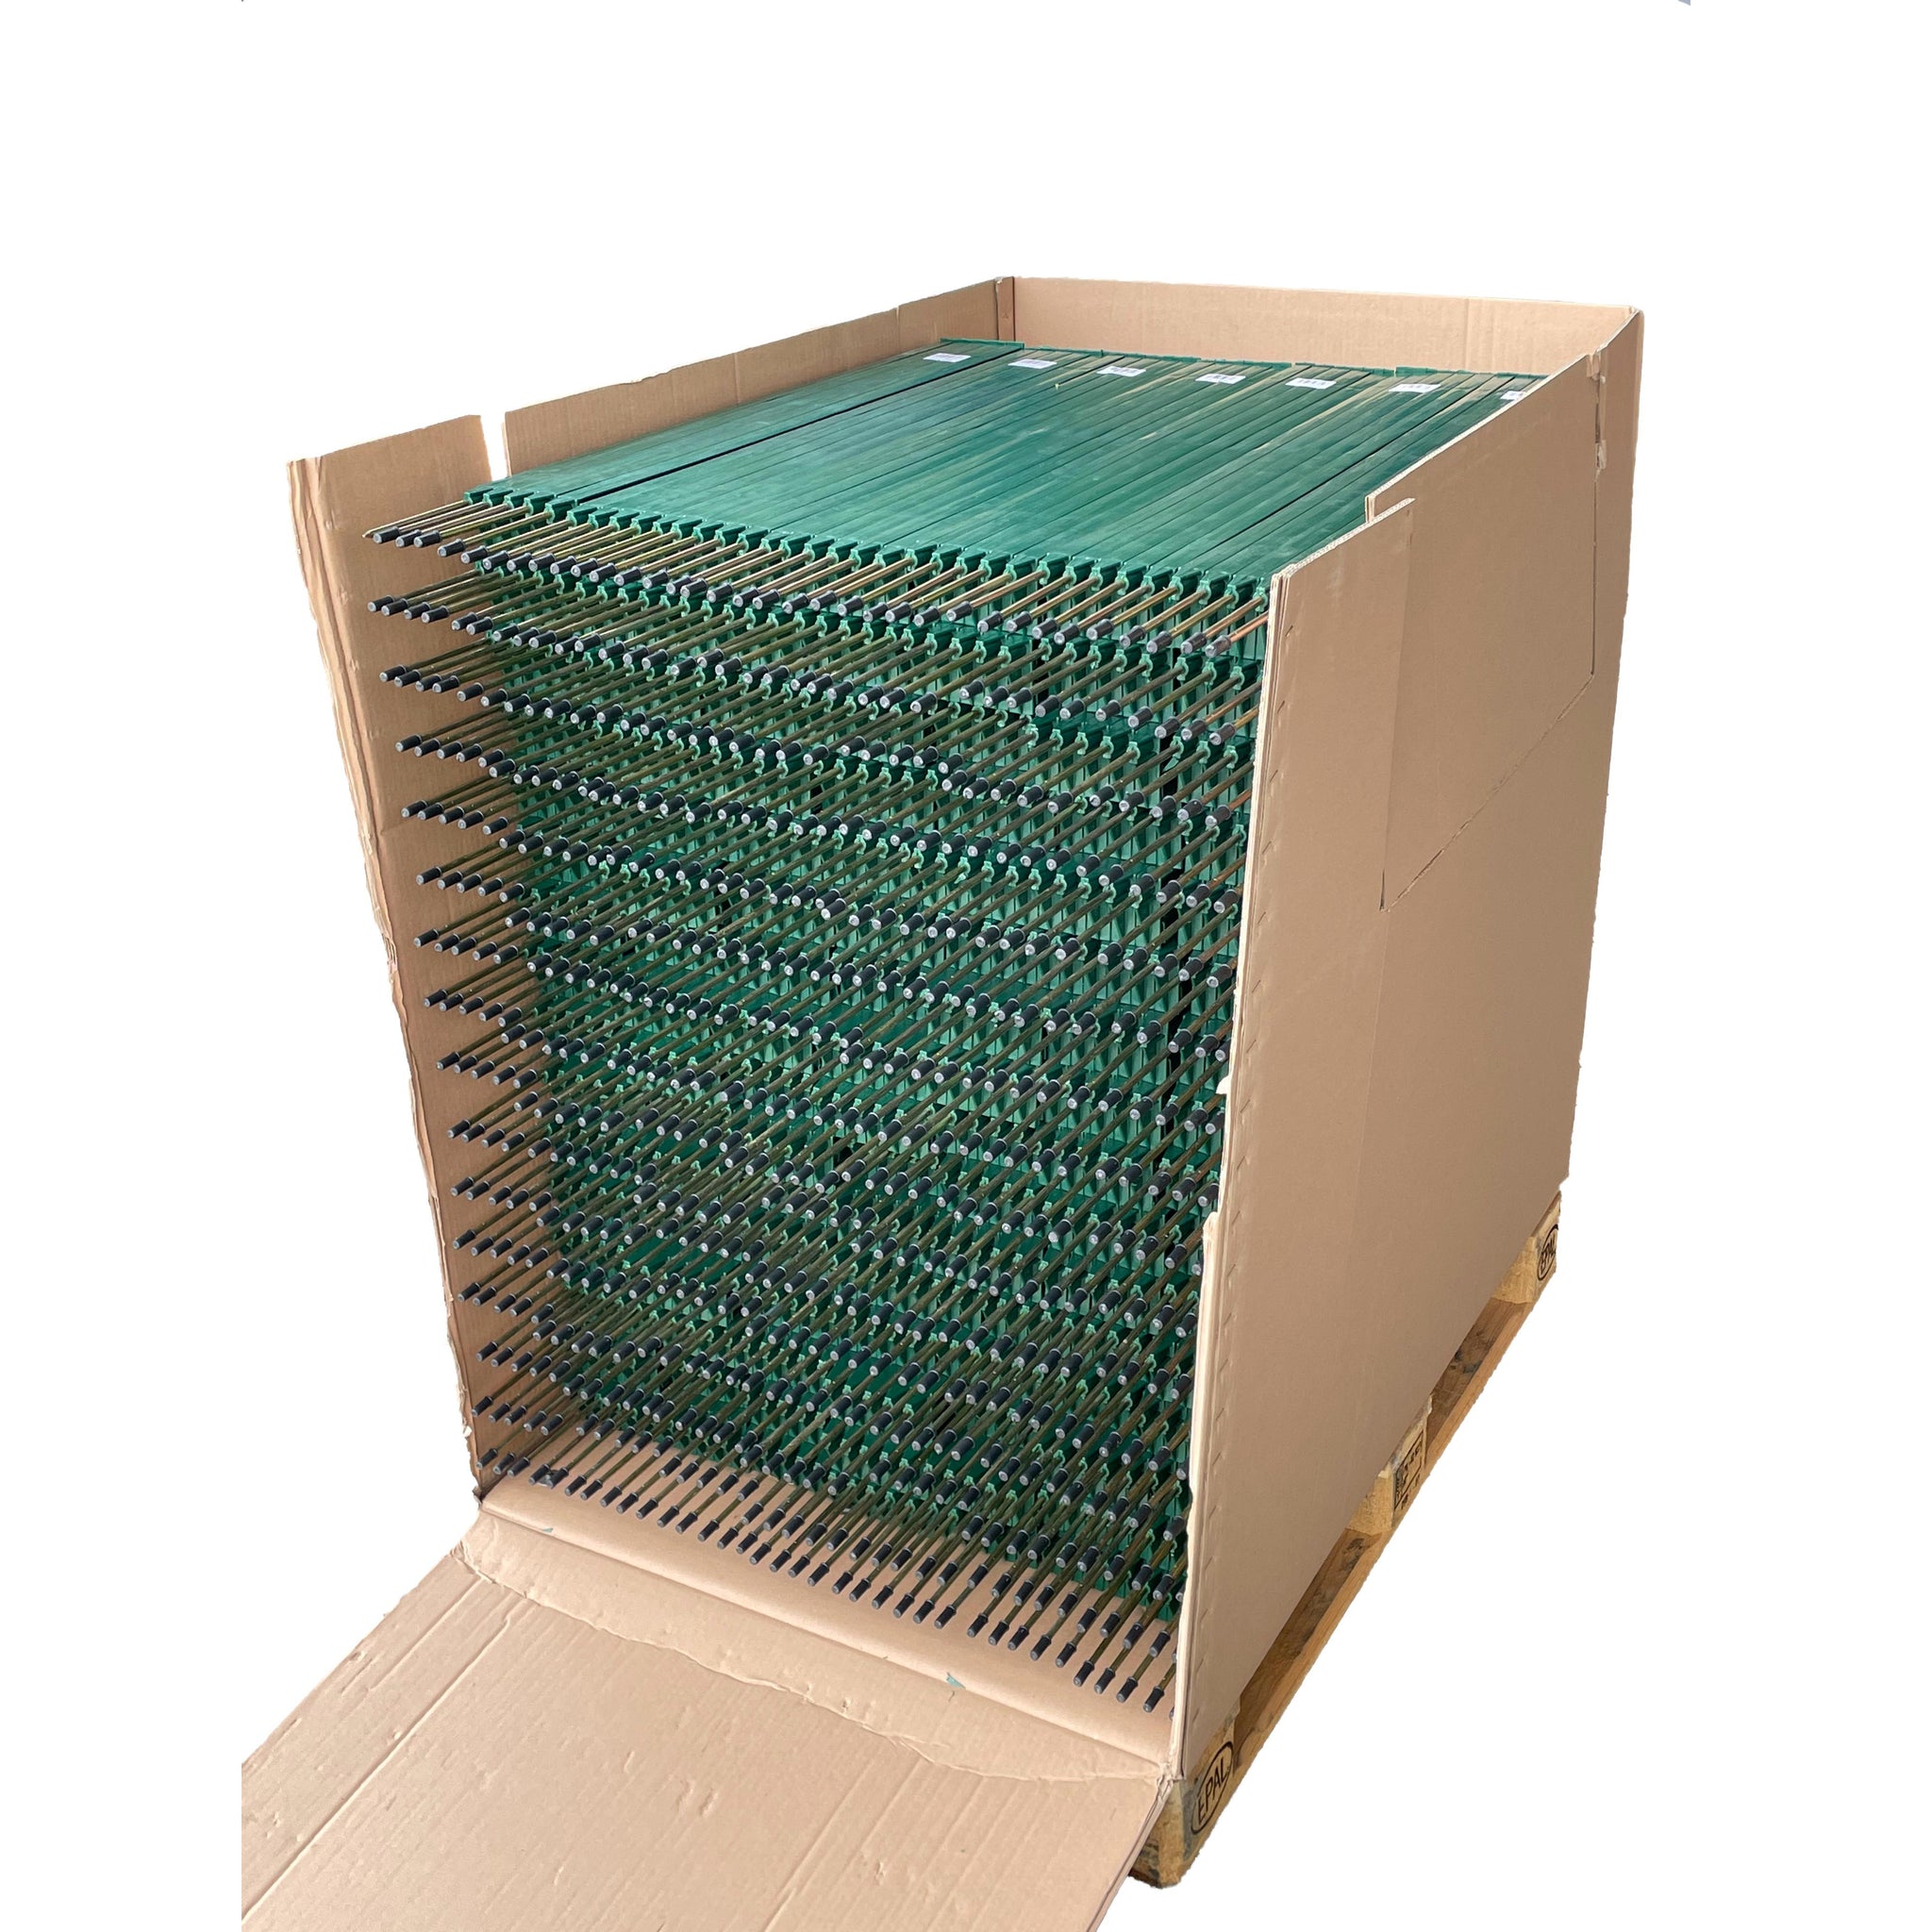 Stalpisori plastic NEXON MEDIUM (mai solid) pentru gard electric 1120 bucati